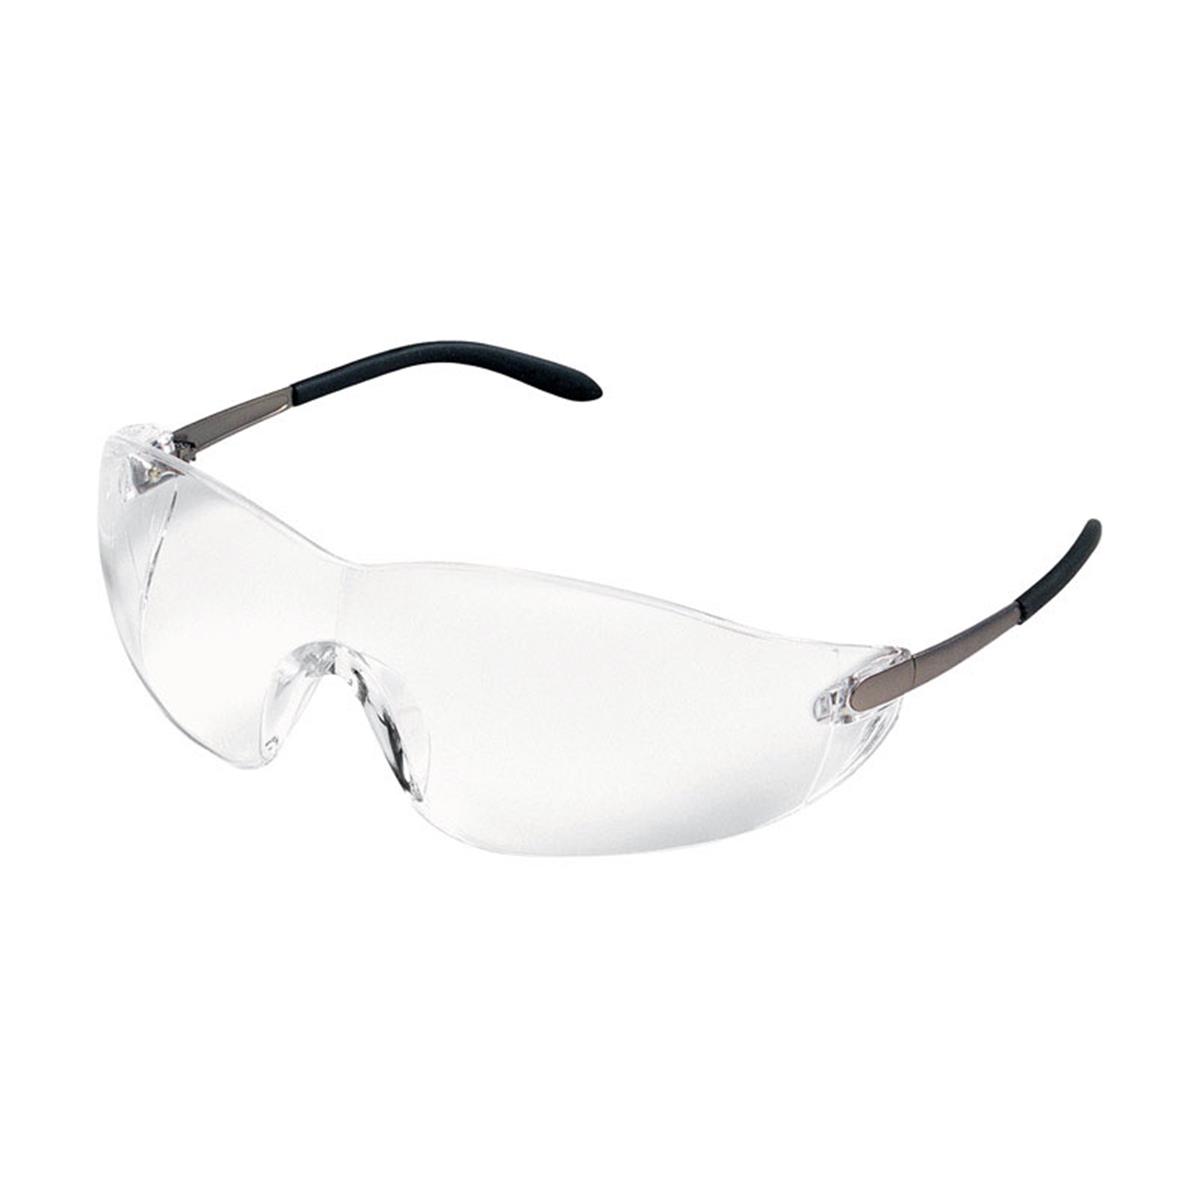 Mcr 2418556 Blackjack Multi-purpose Safety Glasses With Frame, Clear Lens Frame - Pack Of 12